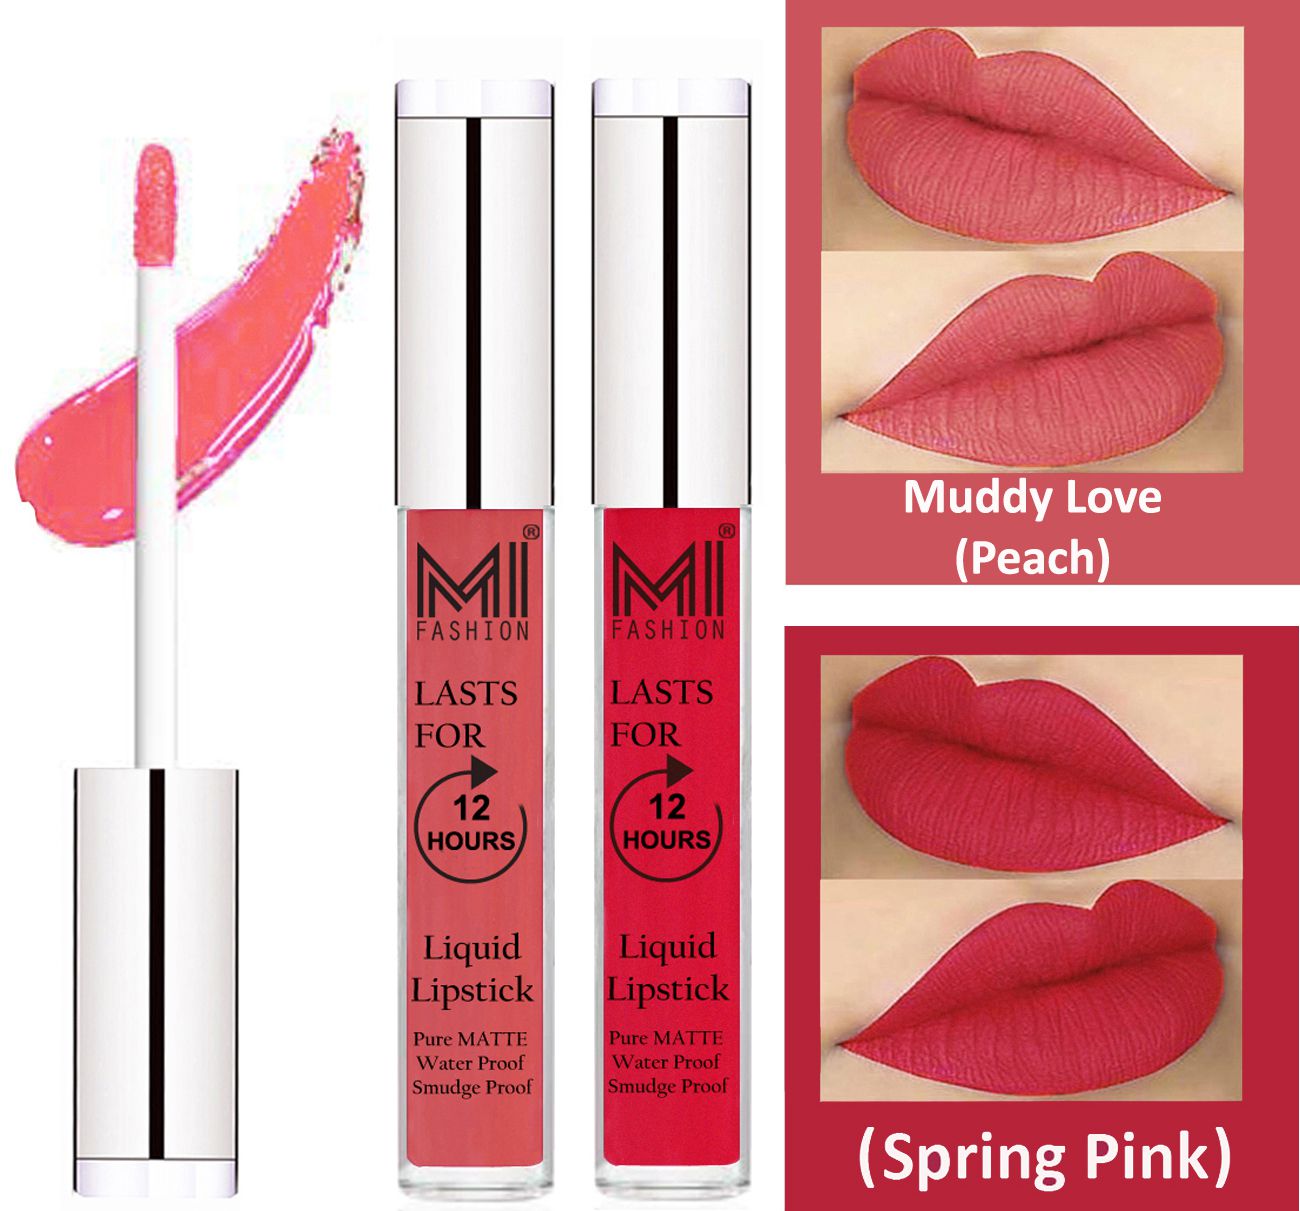     			MI FASHION Liquid Lipstick Peach,Spring Pink Pack of 2